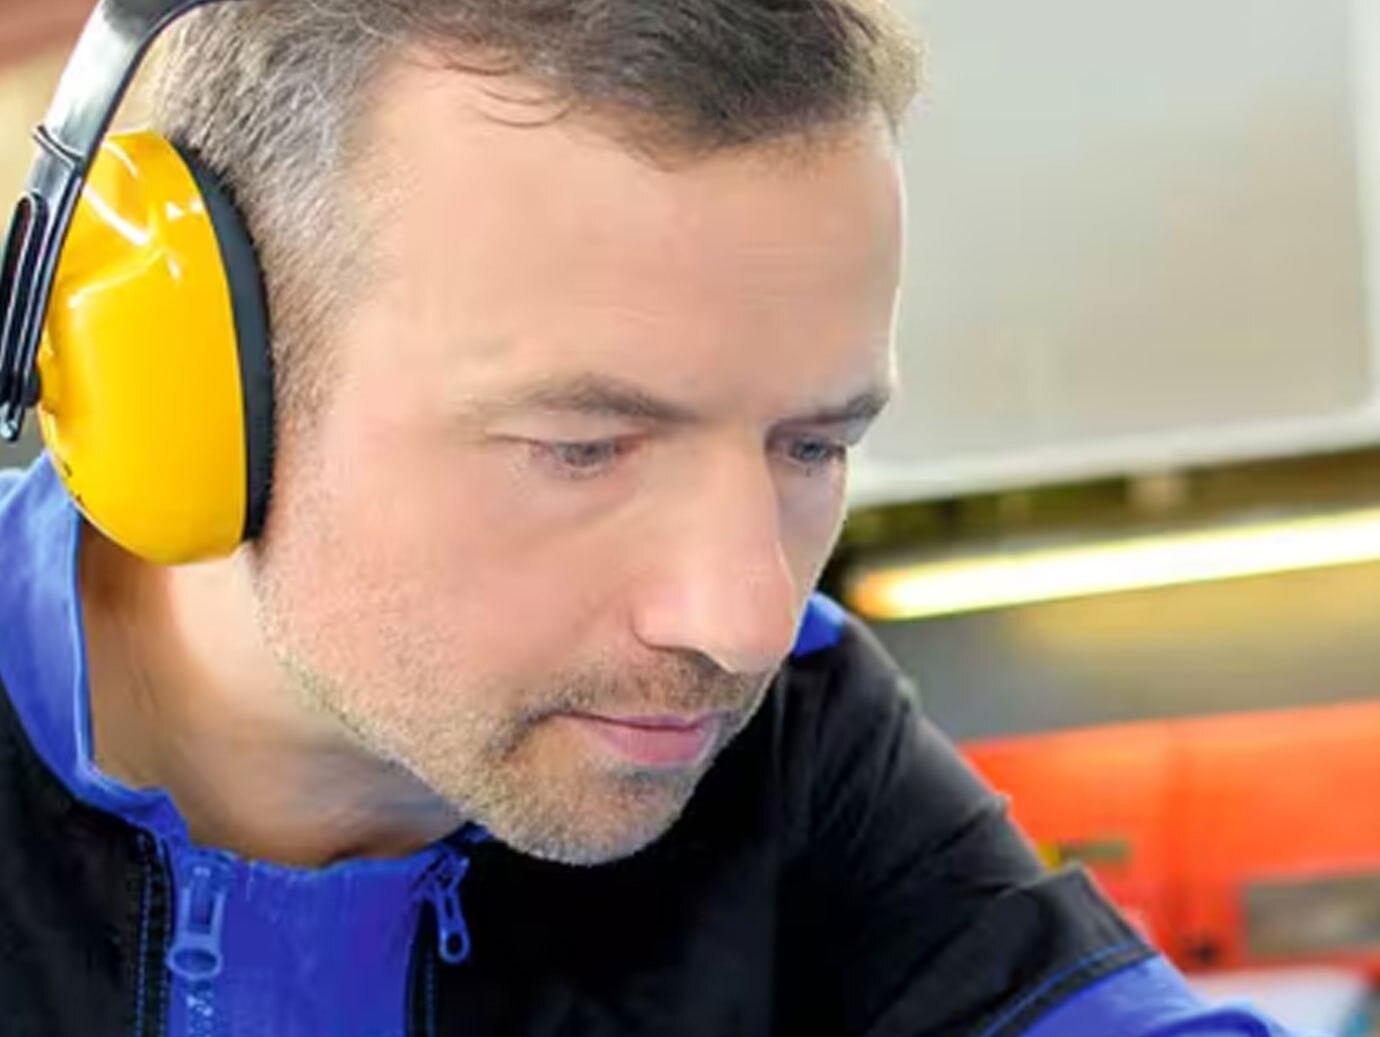 man wearing yellow headphones 